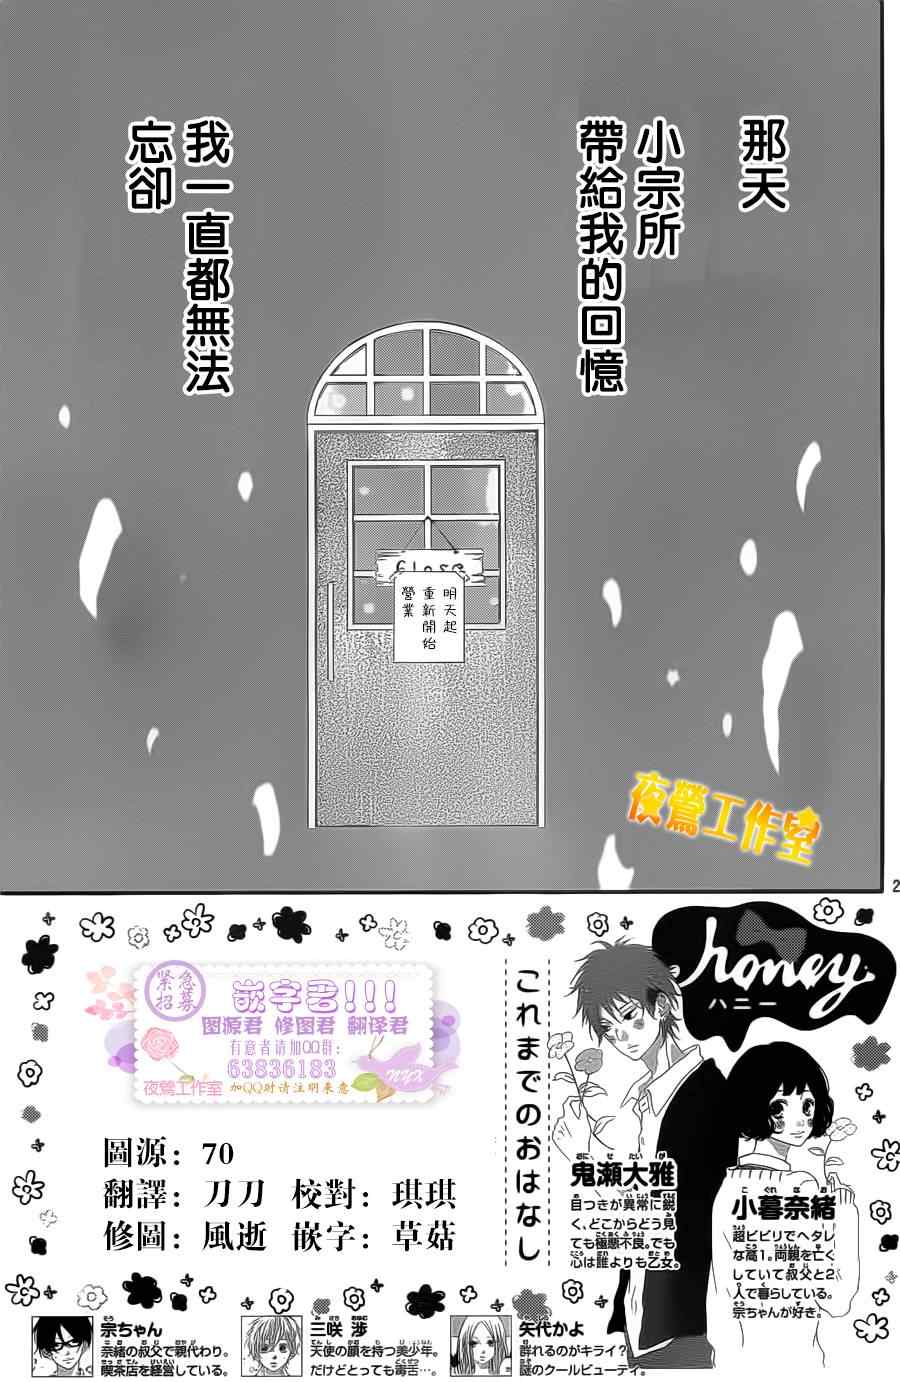 《Honey》漫画 004集